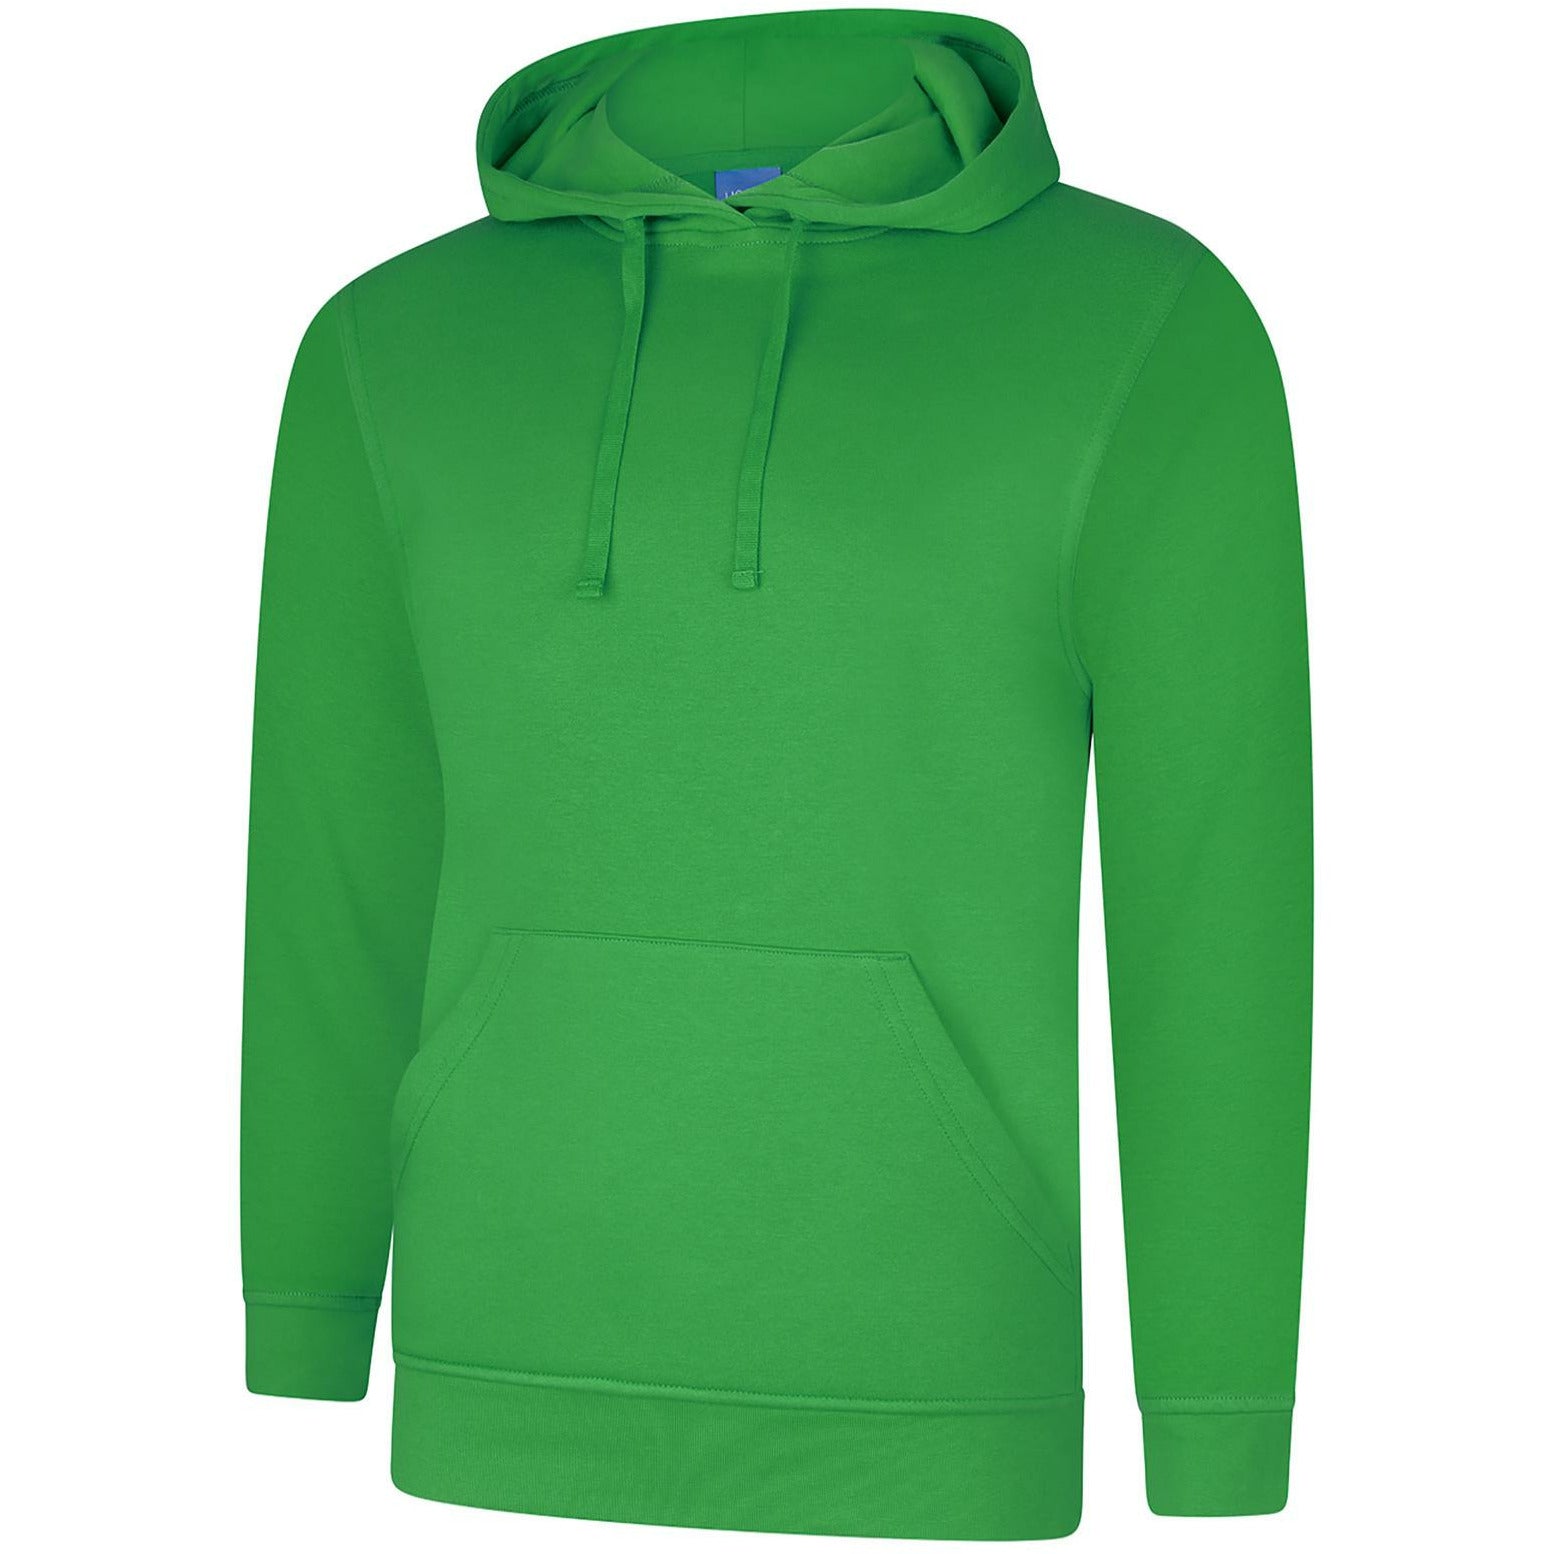 Deluxe Hooded Sweatshirt (L - 2XL) Amazon Green